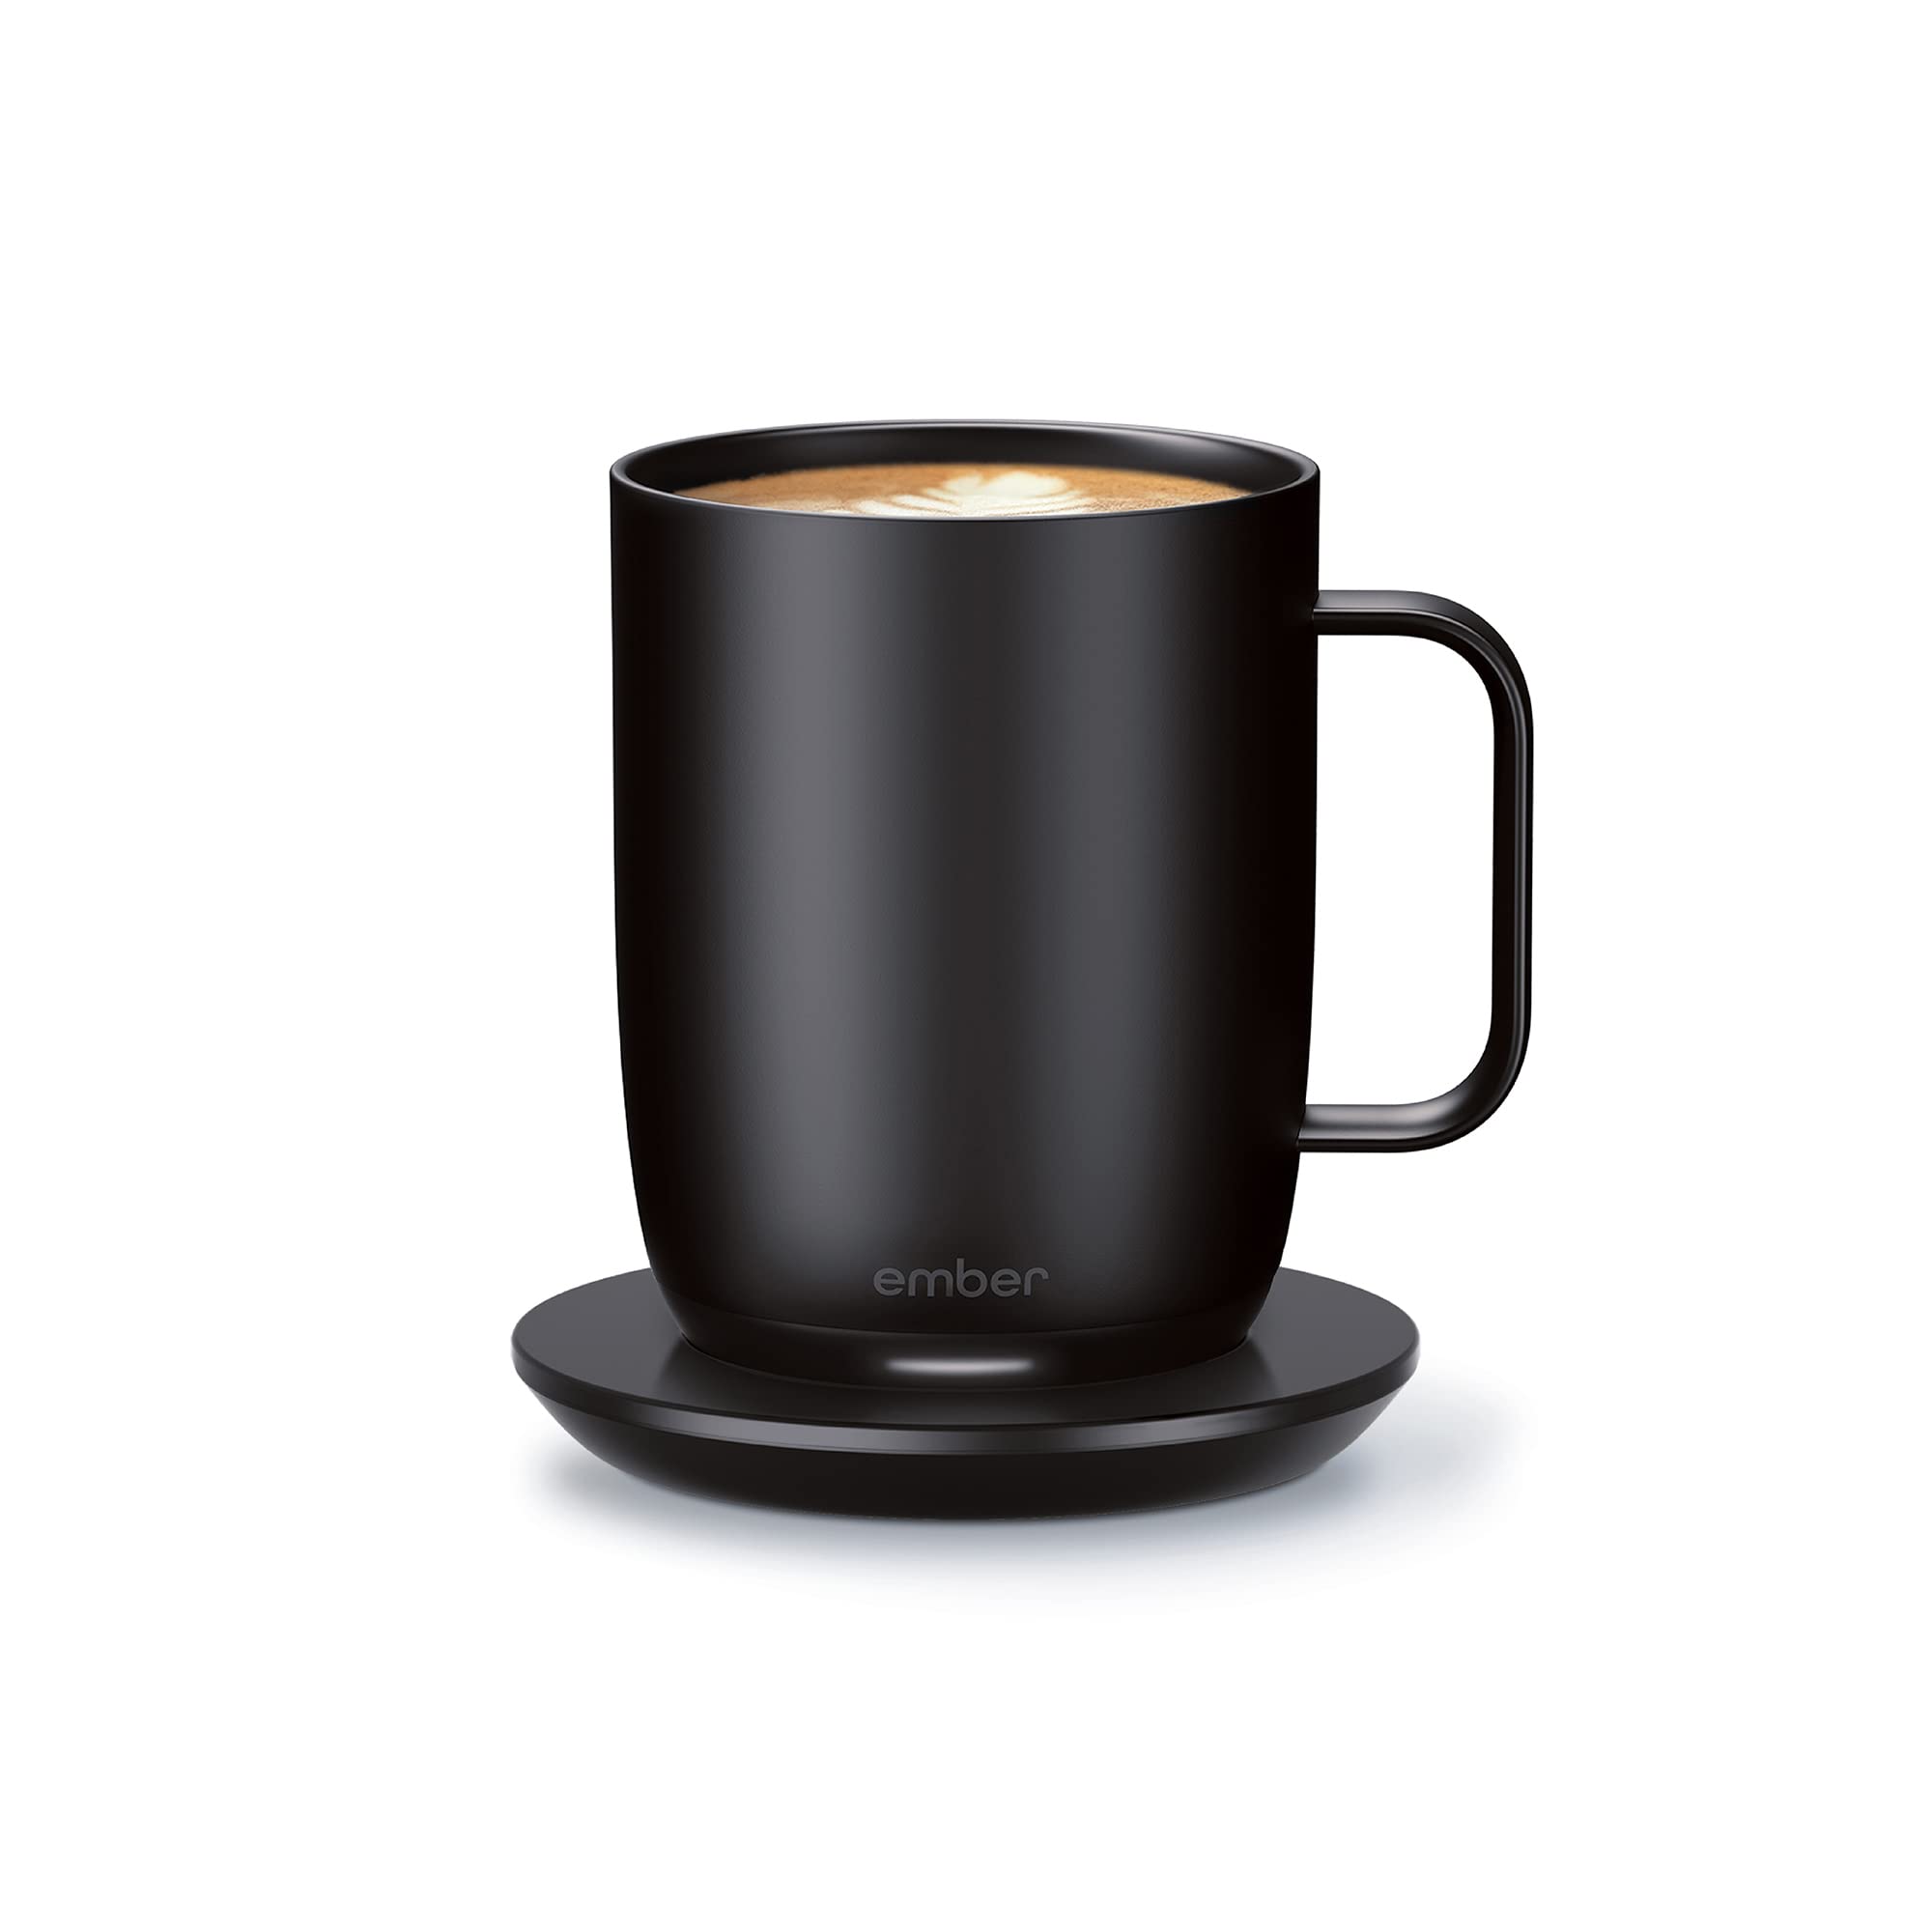 Ember NEW  Temperature Control Smart Mug 2, 10 oz, 1.5-hr Battery Life - App Controlled Heated Coffee Mug - Improved Design